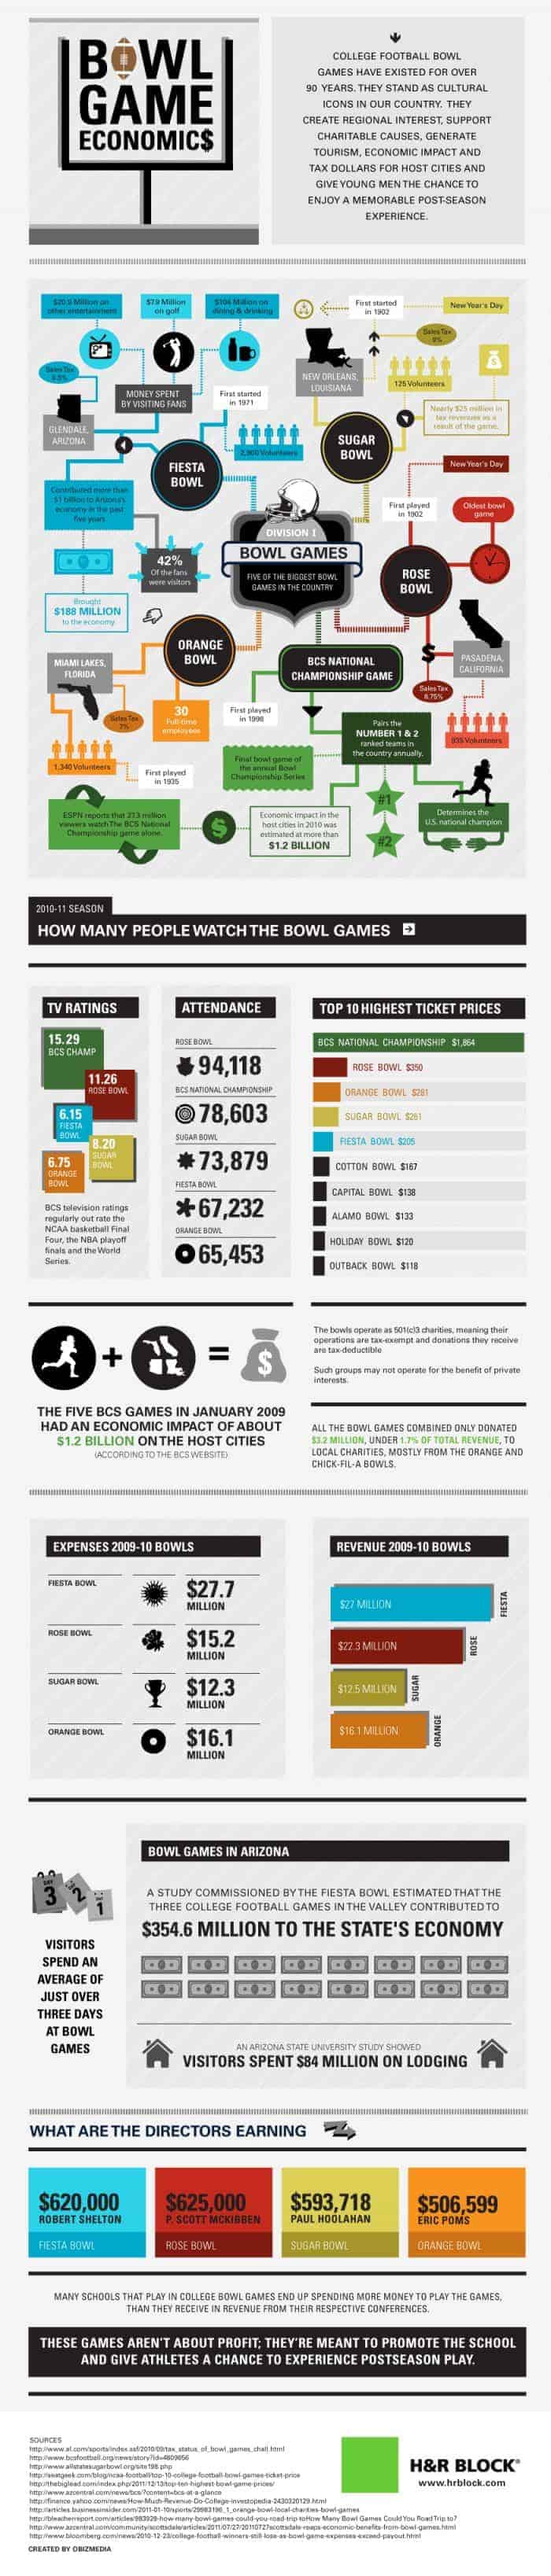 College Bowl Game Economics Infographic